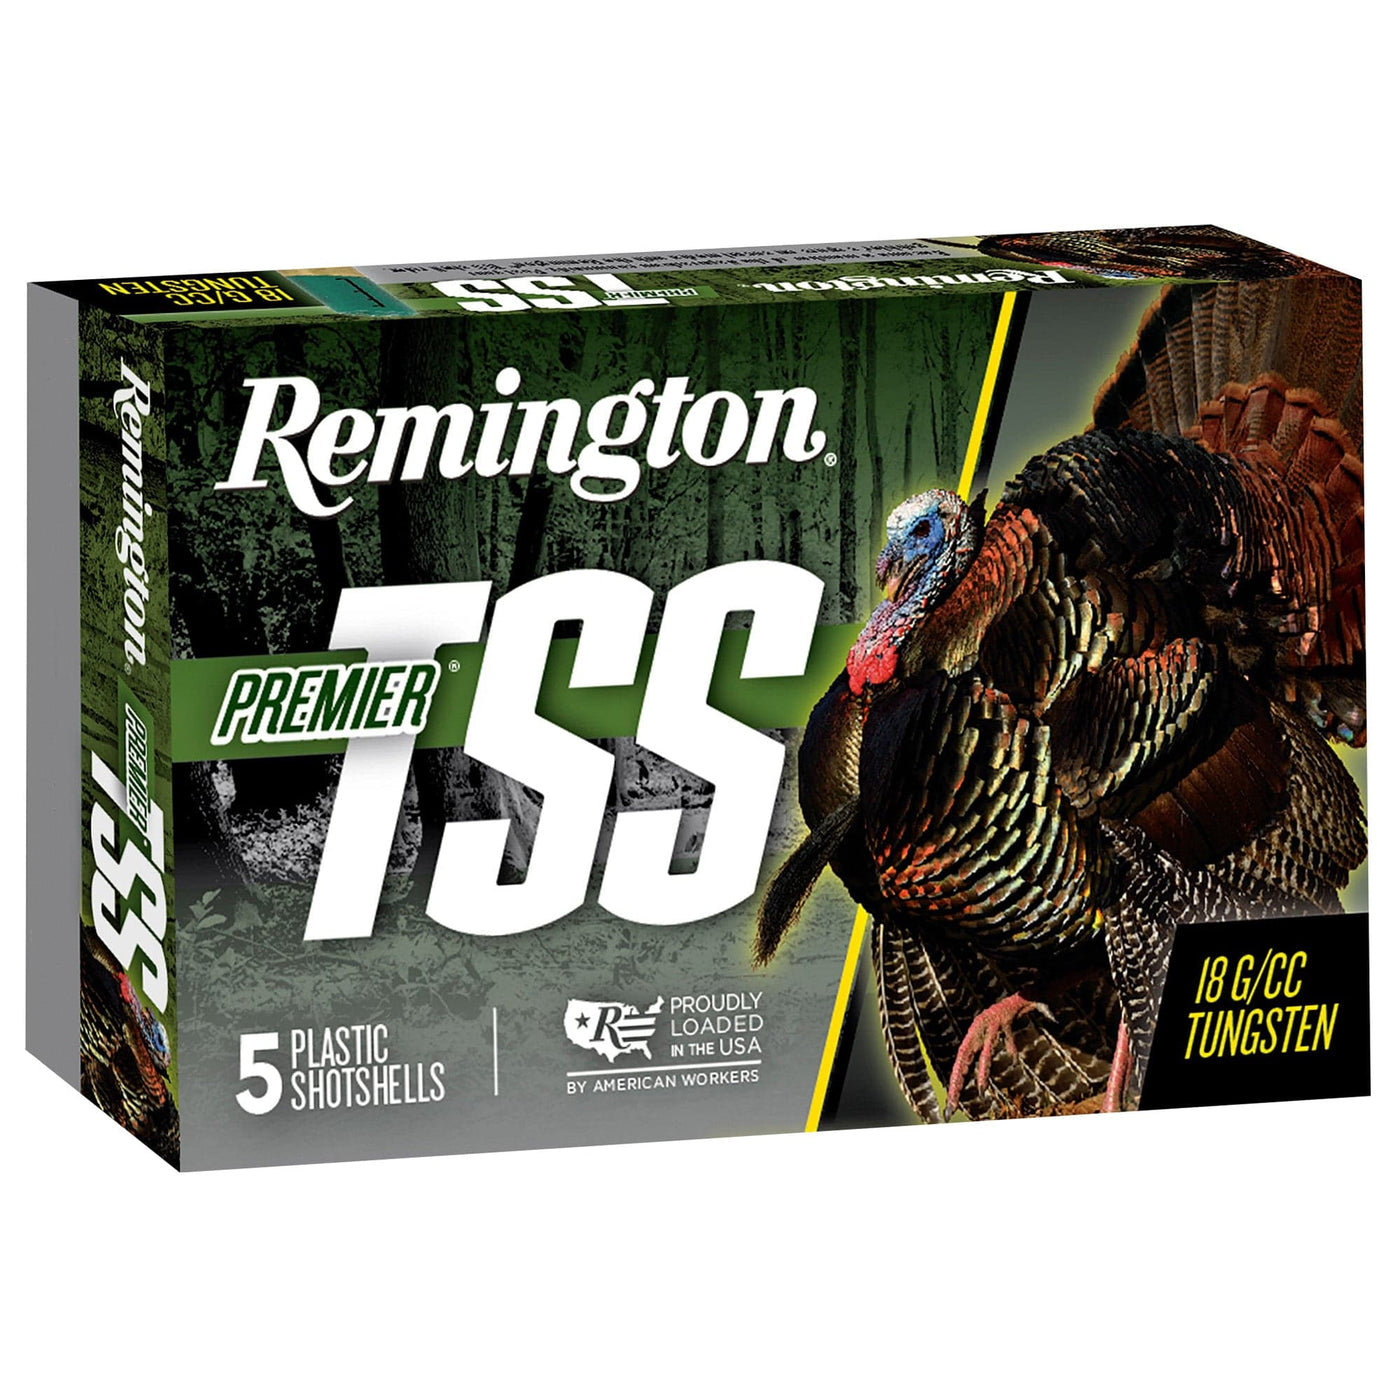 Remington Ammunition Remington Tss Turkey 410 Ga 3" - 5rd 10bx/cs 1100fps 7/8oz #9 Ammo